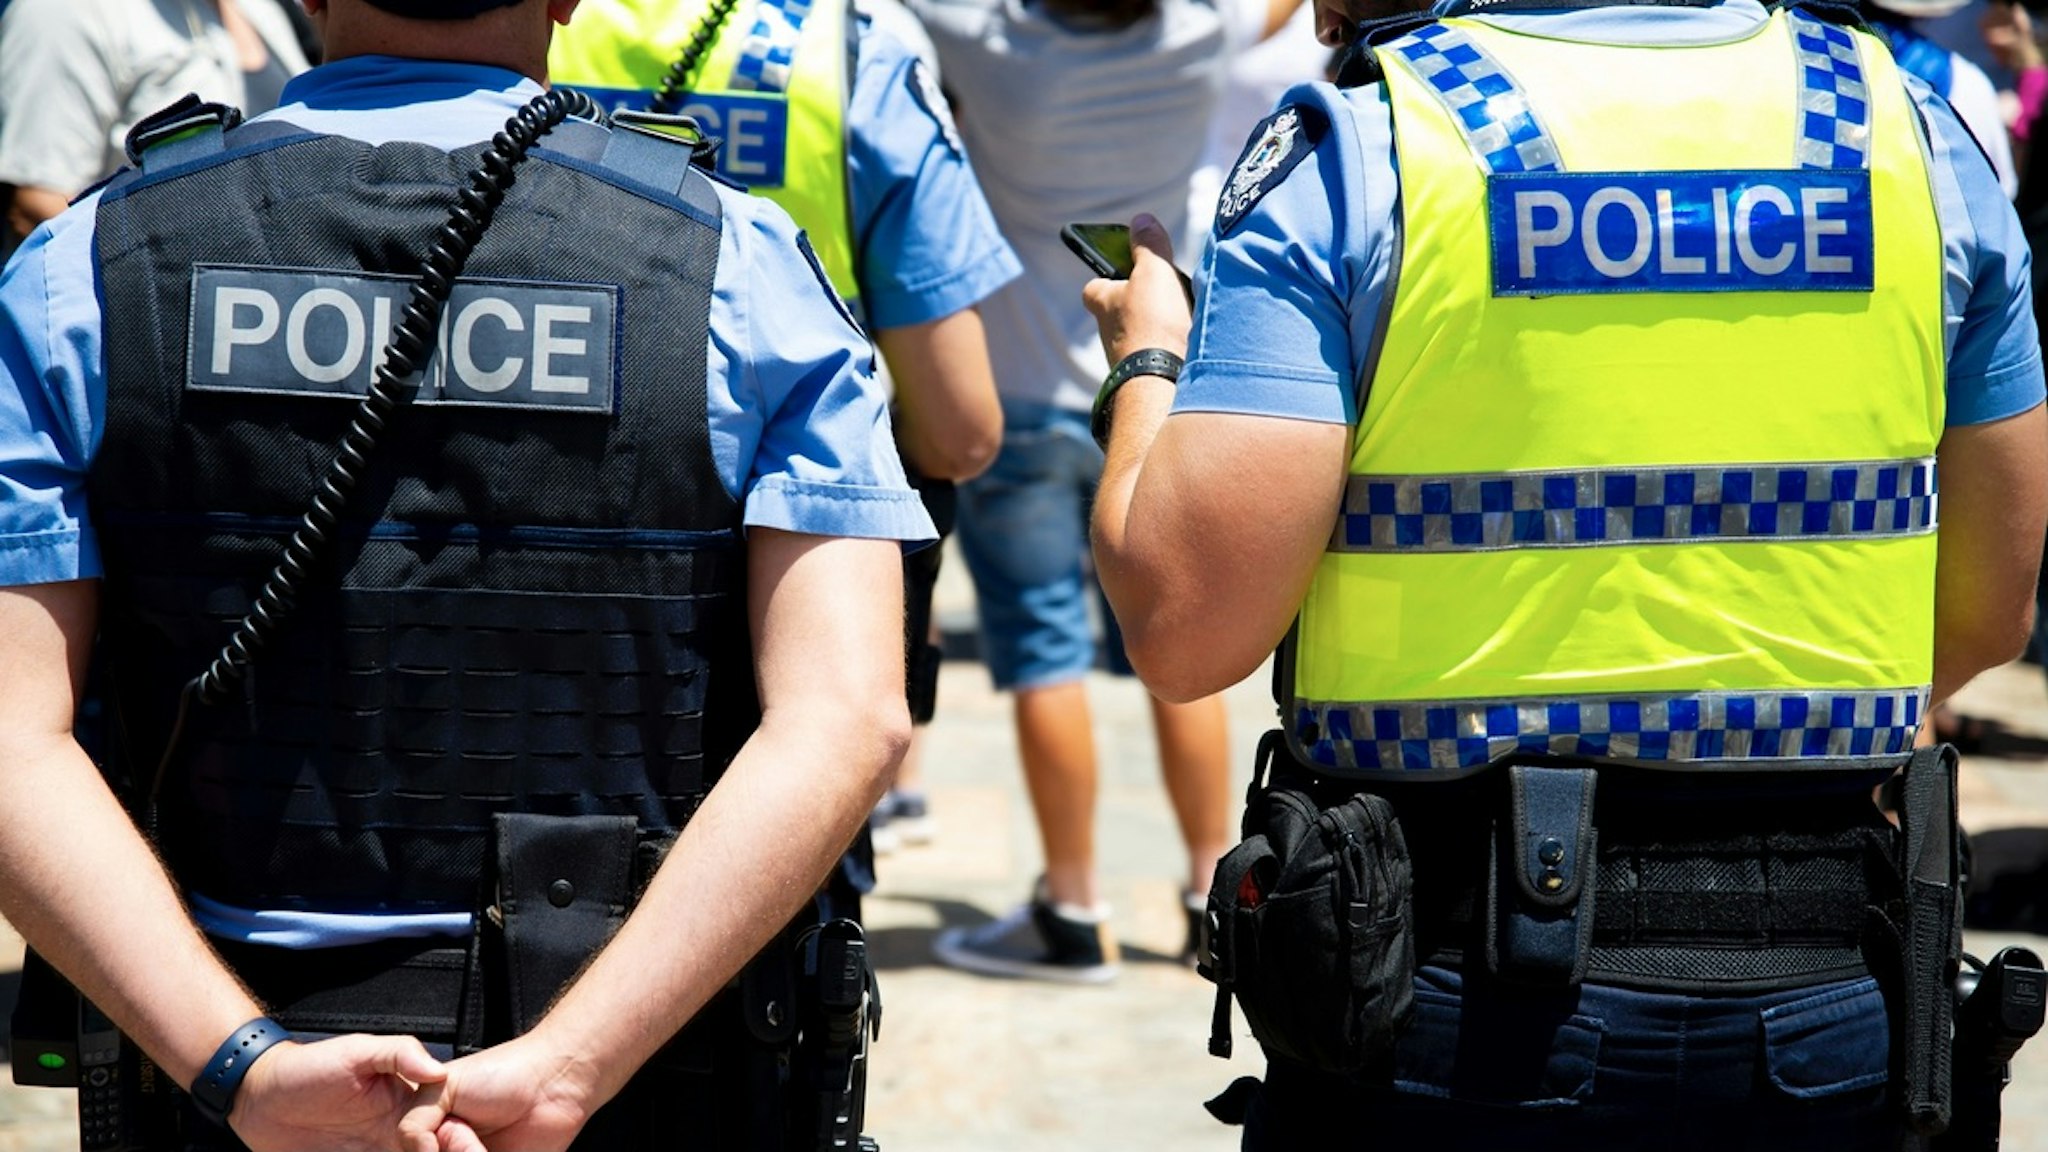 Rear View Of Police - stock photo Photo taken in Perth, Australia Adrian Wojcik / EyeEm via Getty Images